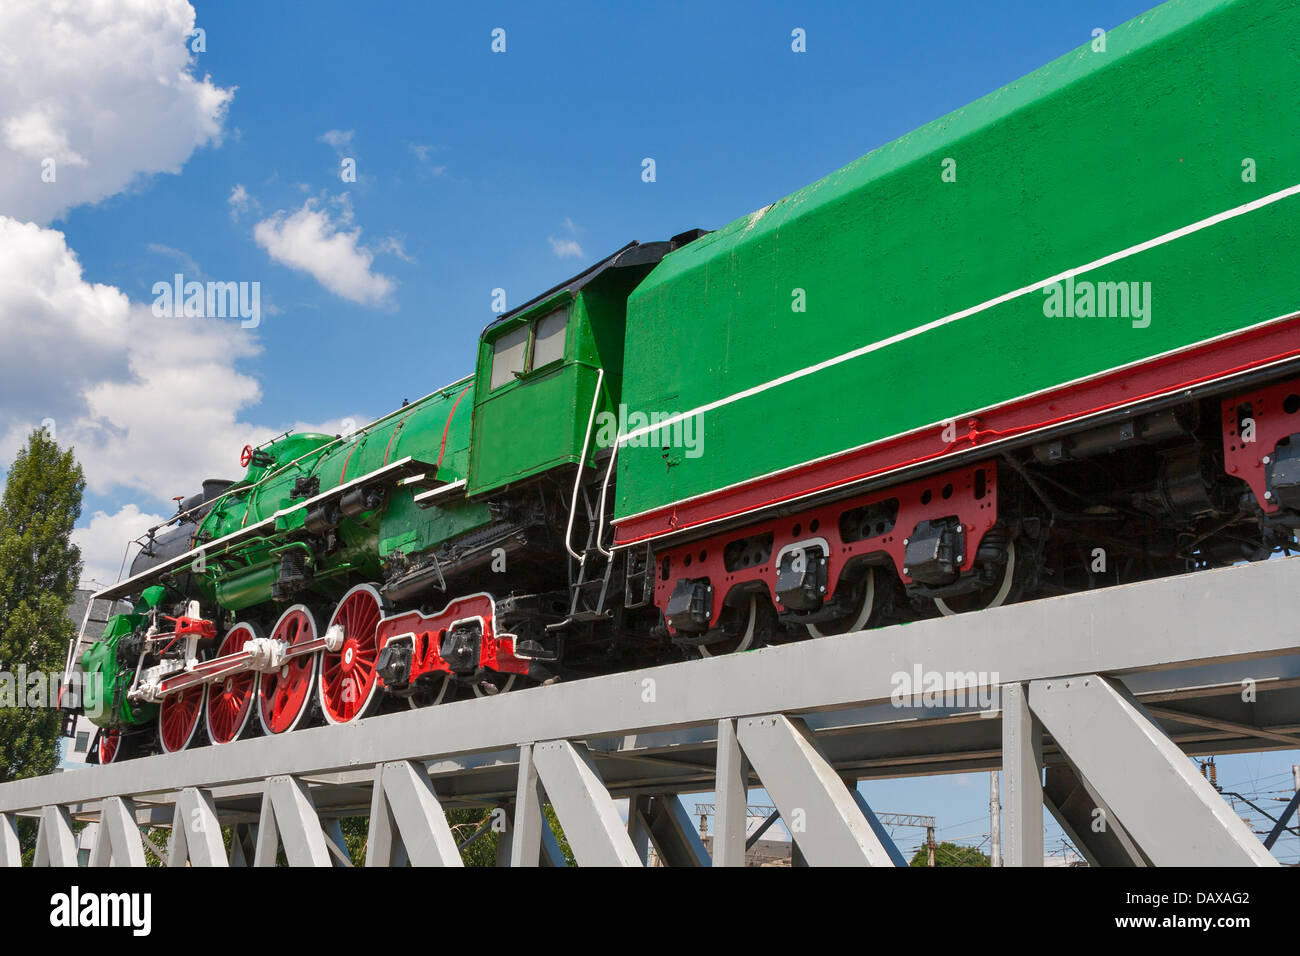 Steam vintage locomotive located in Kiev, Ukraine against blue sky Stock Photo